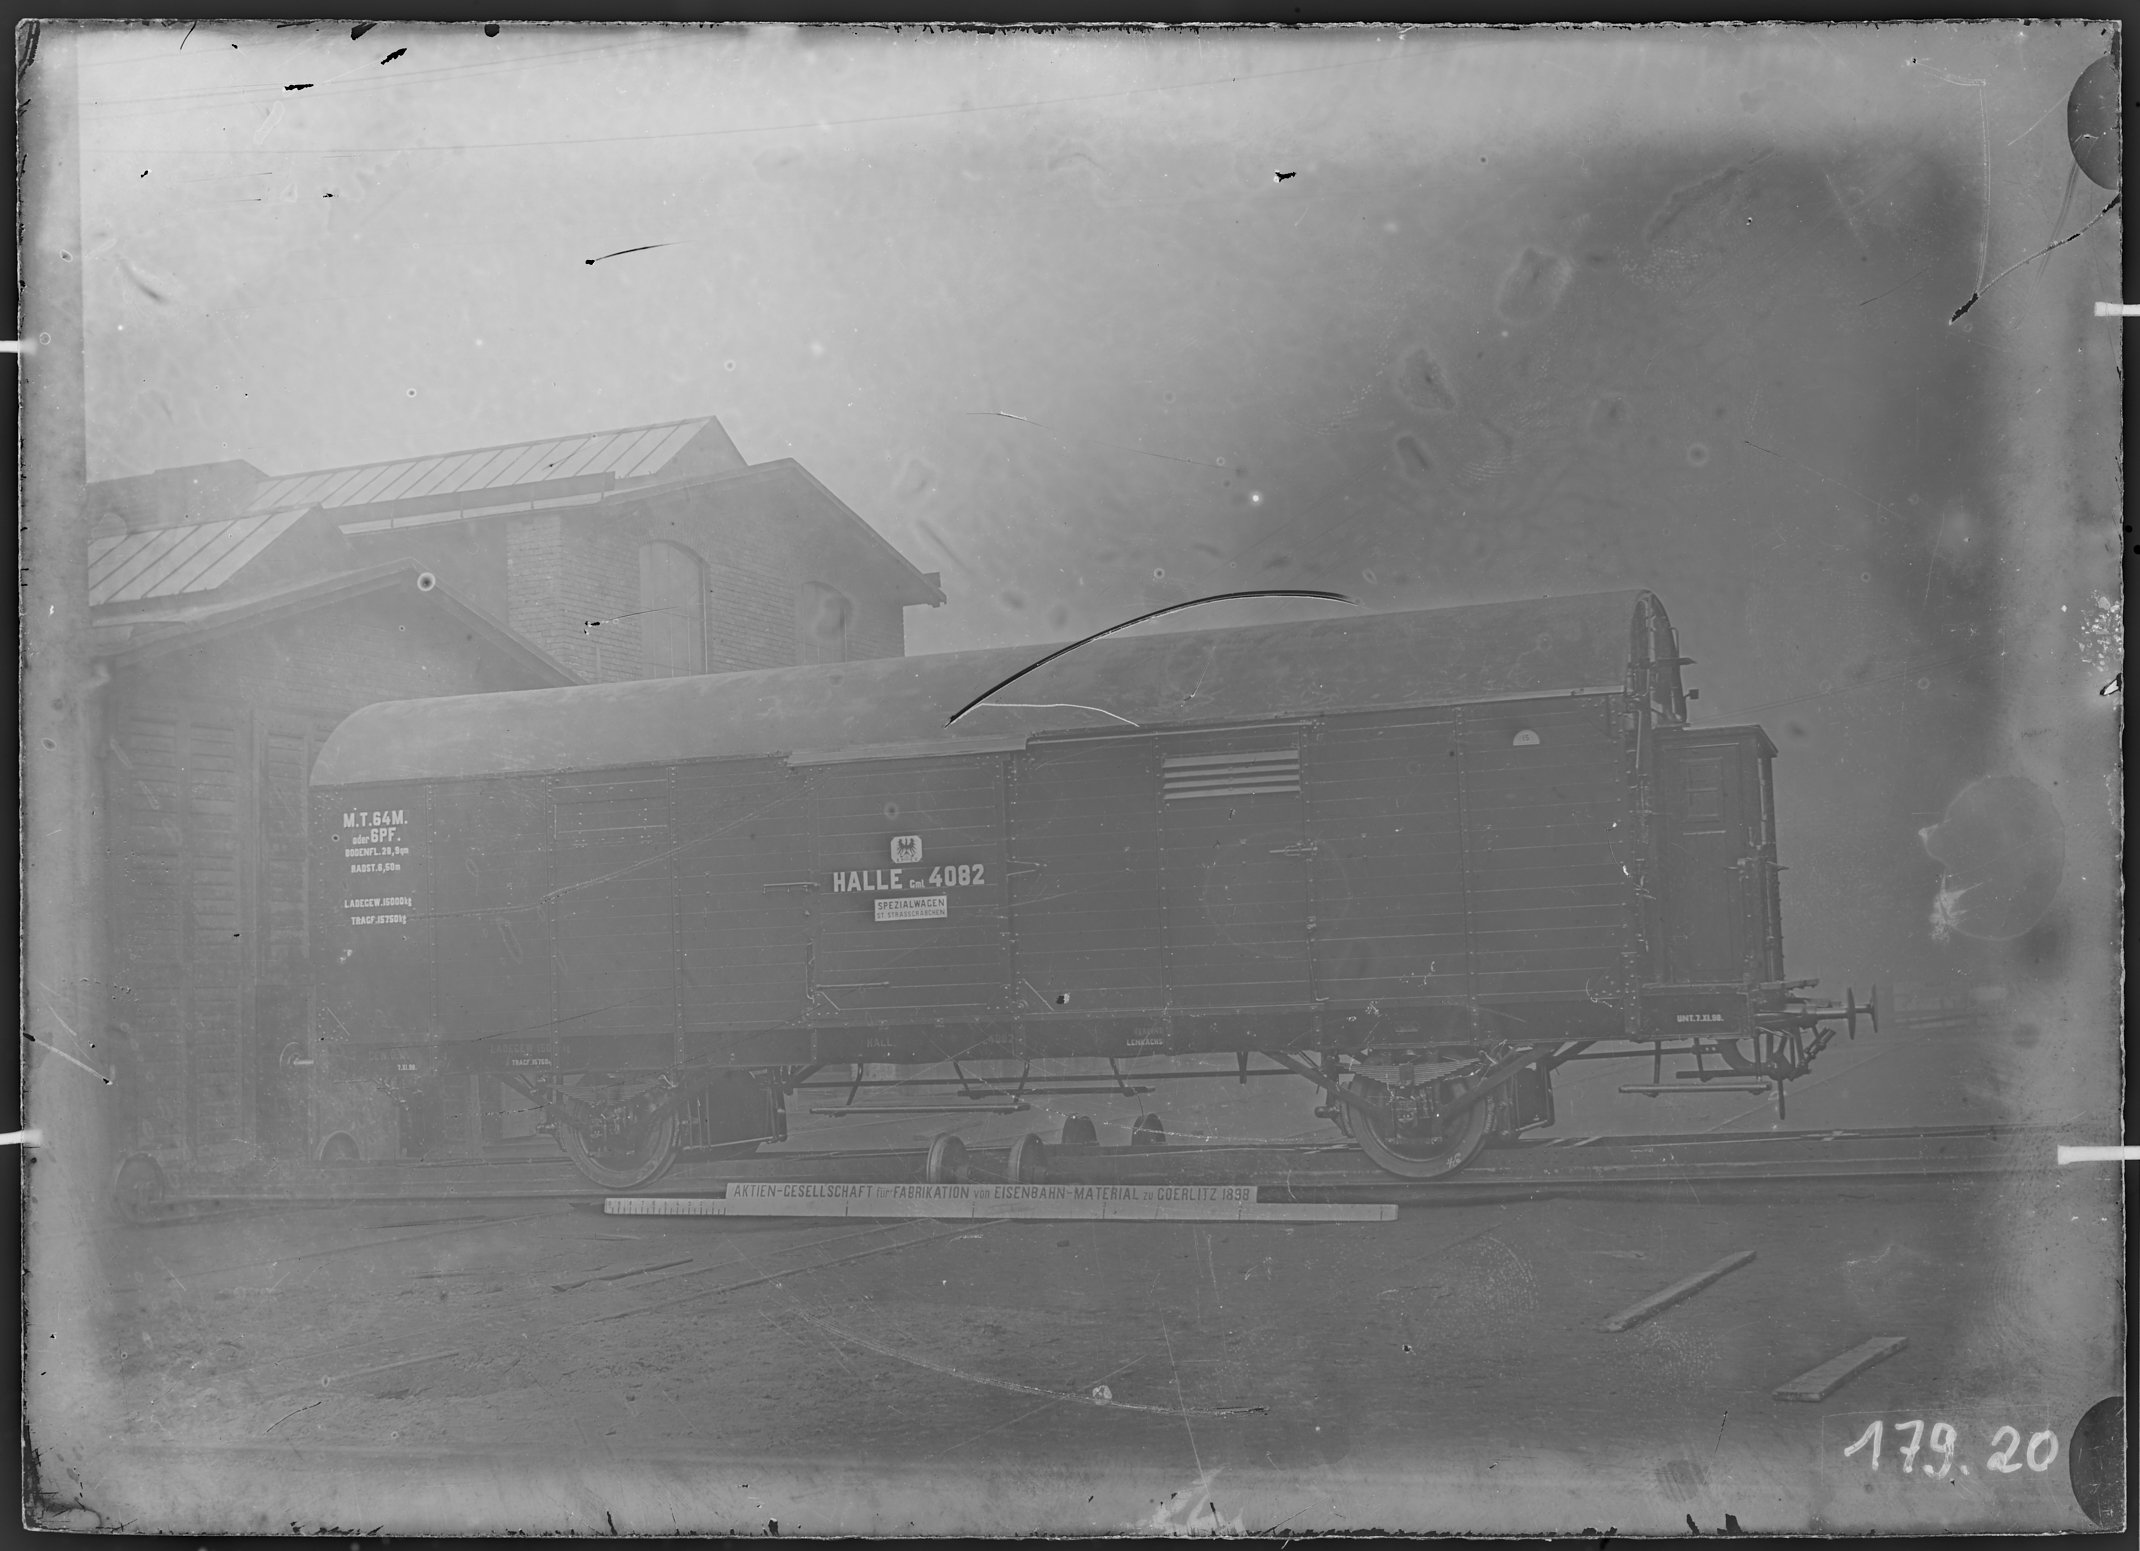 Fotografie: zweiachsiger gedeckter Güterwagen, Gattung Gml (Längsansicht), 1898. Königlich Preußische Staatseisenbahnen (K.P.St.E.)? (Verkehrsmuseum Dresden CC BY-NC-SA)